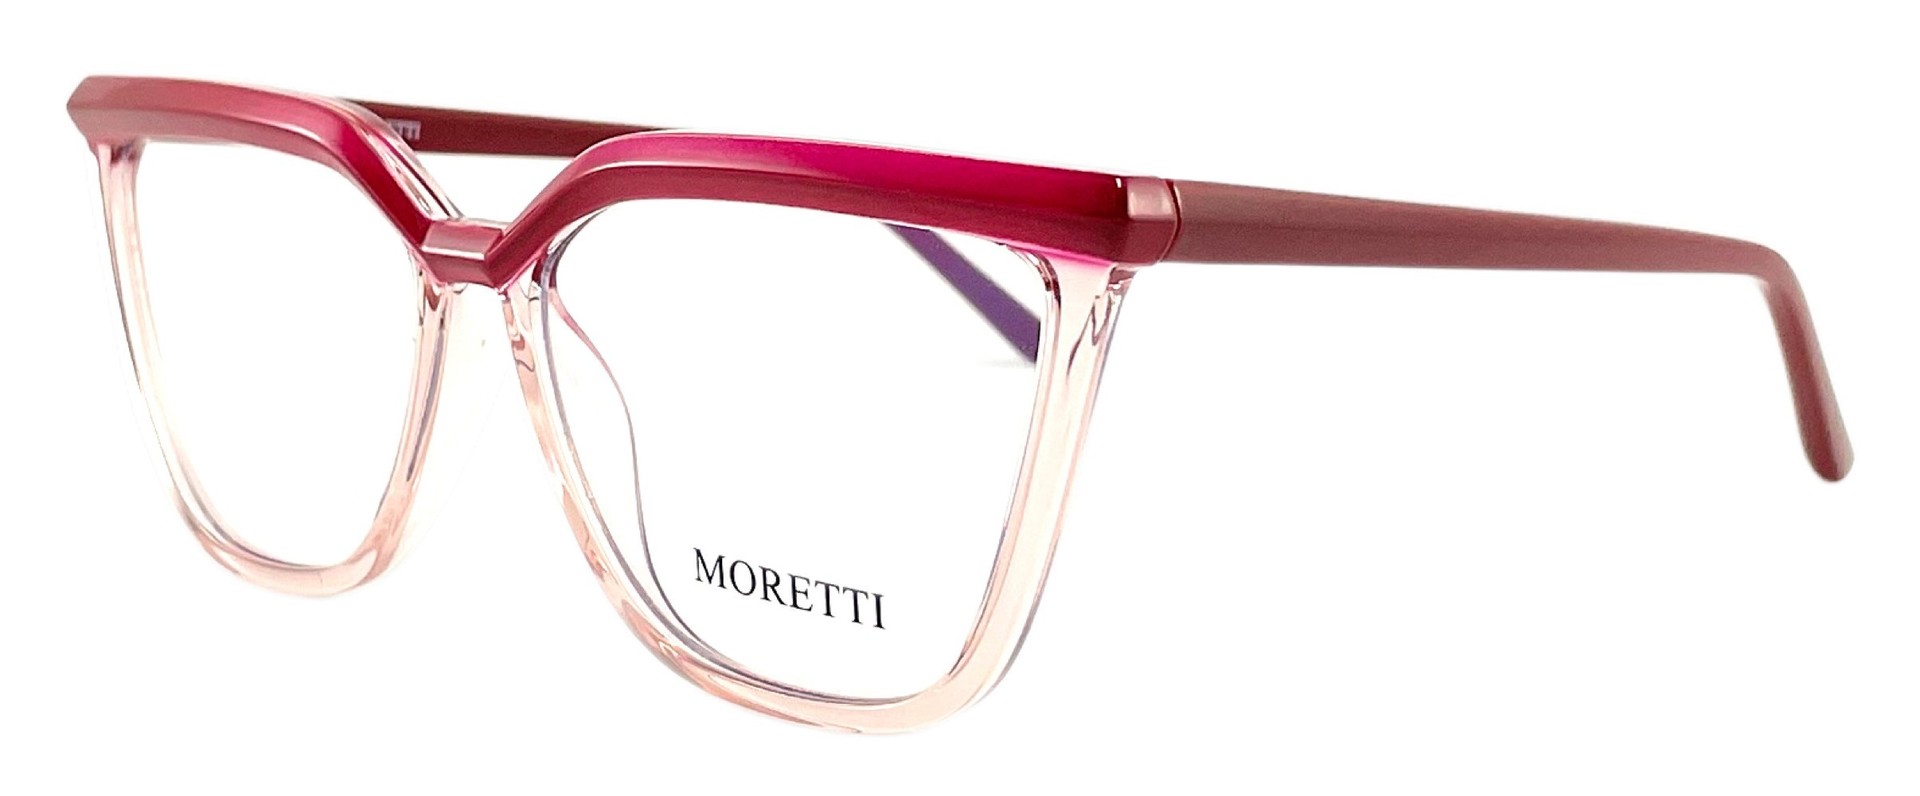 Moretti 2160 C4 2